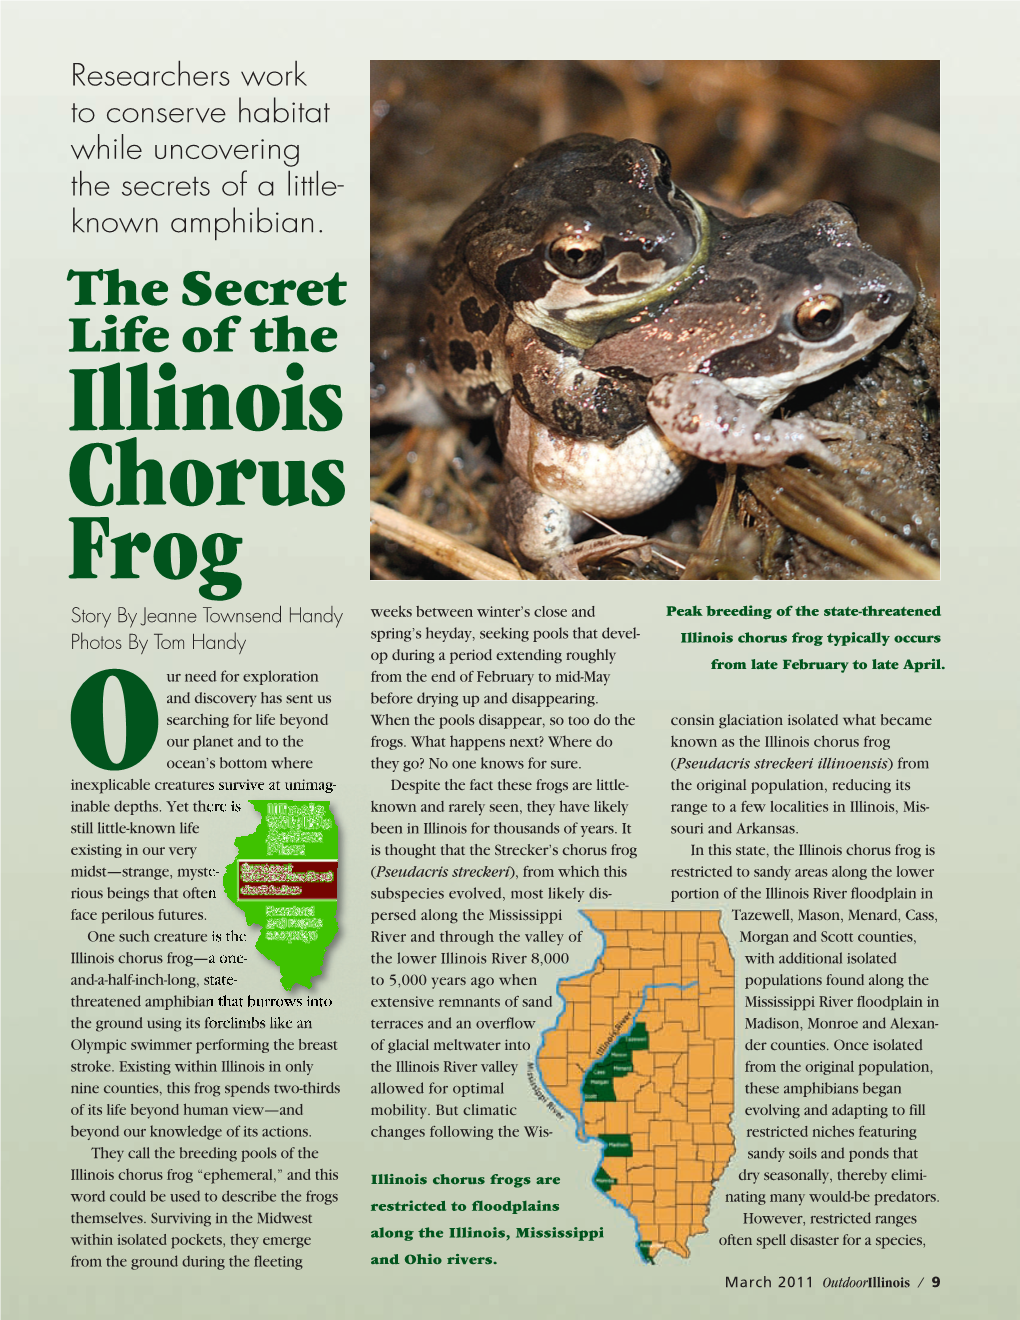 The Secret Life of the Illinois Chorus Frog